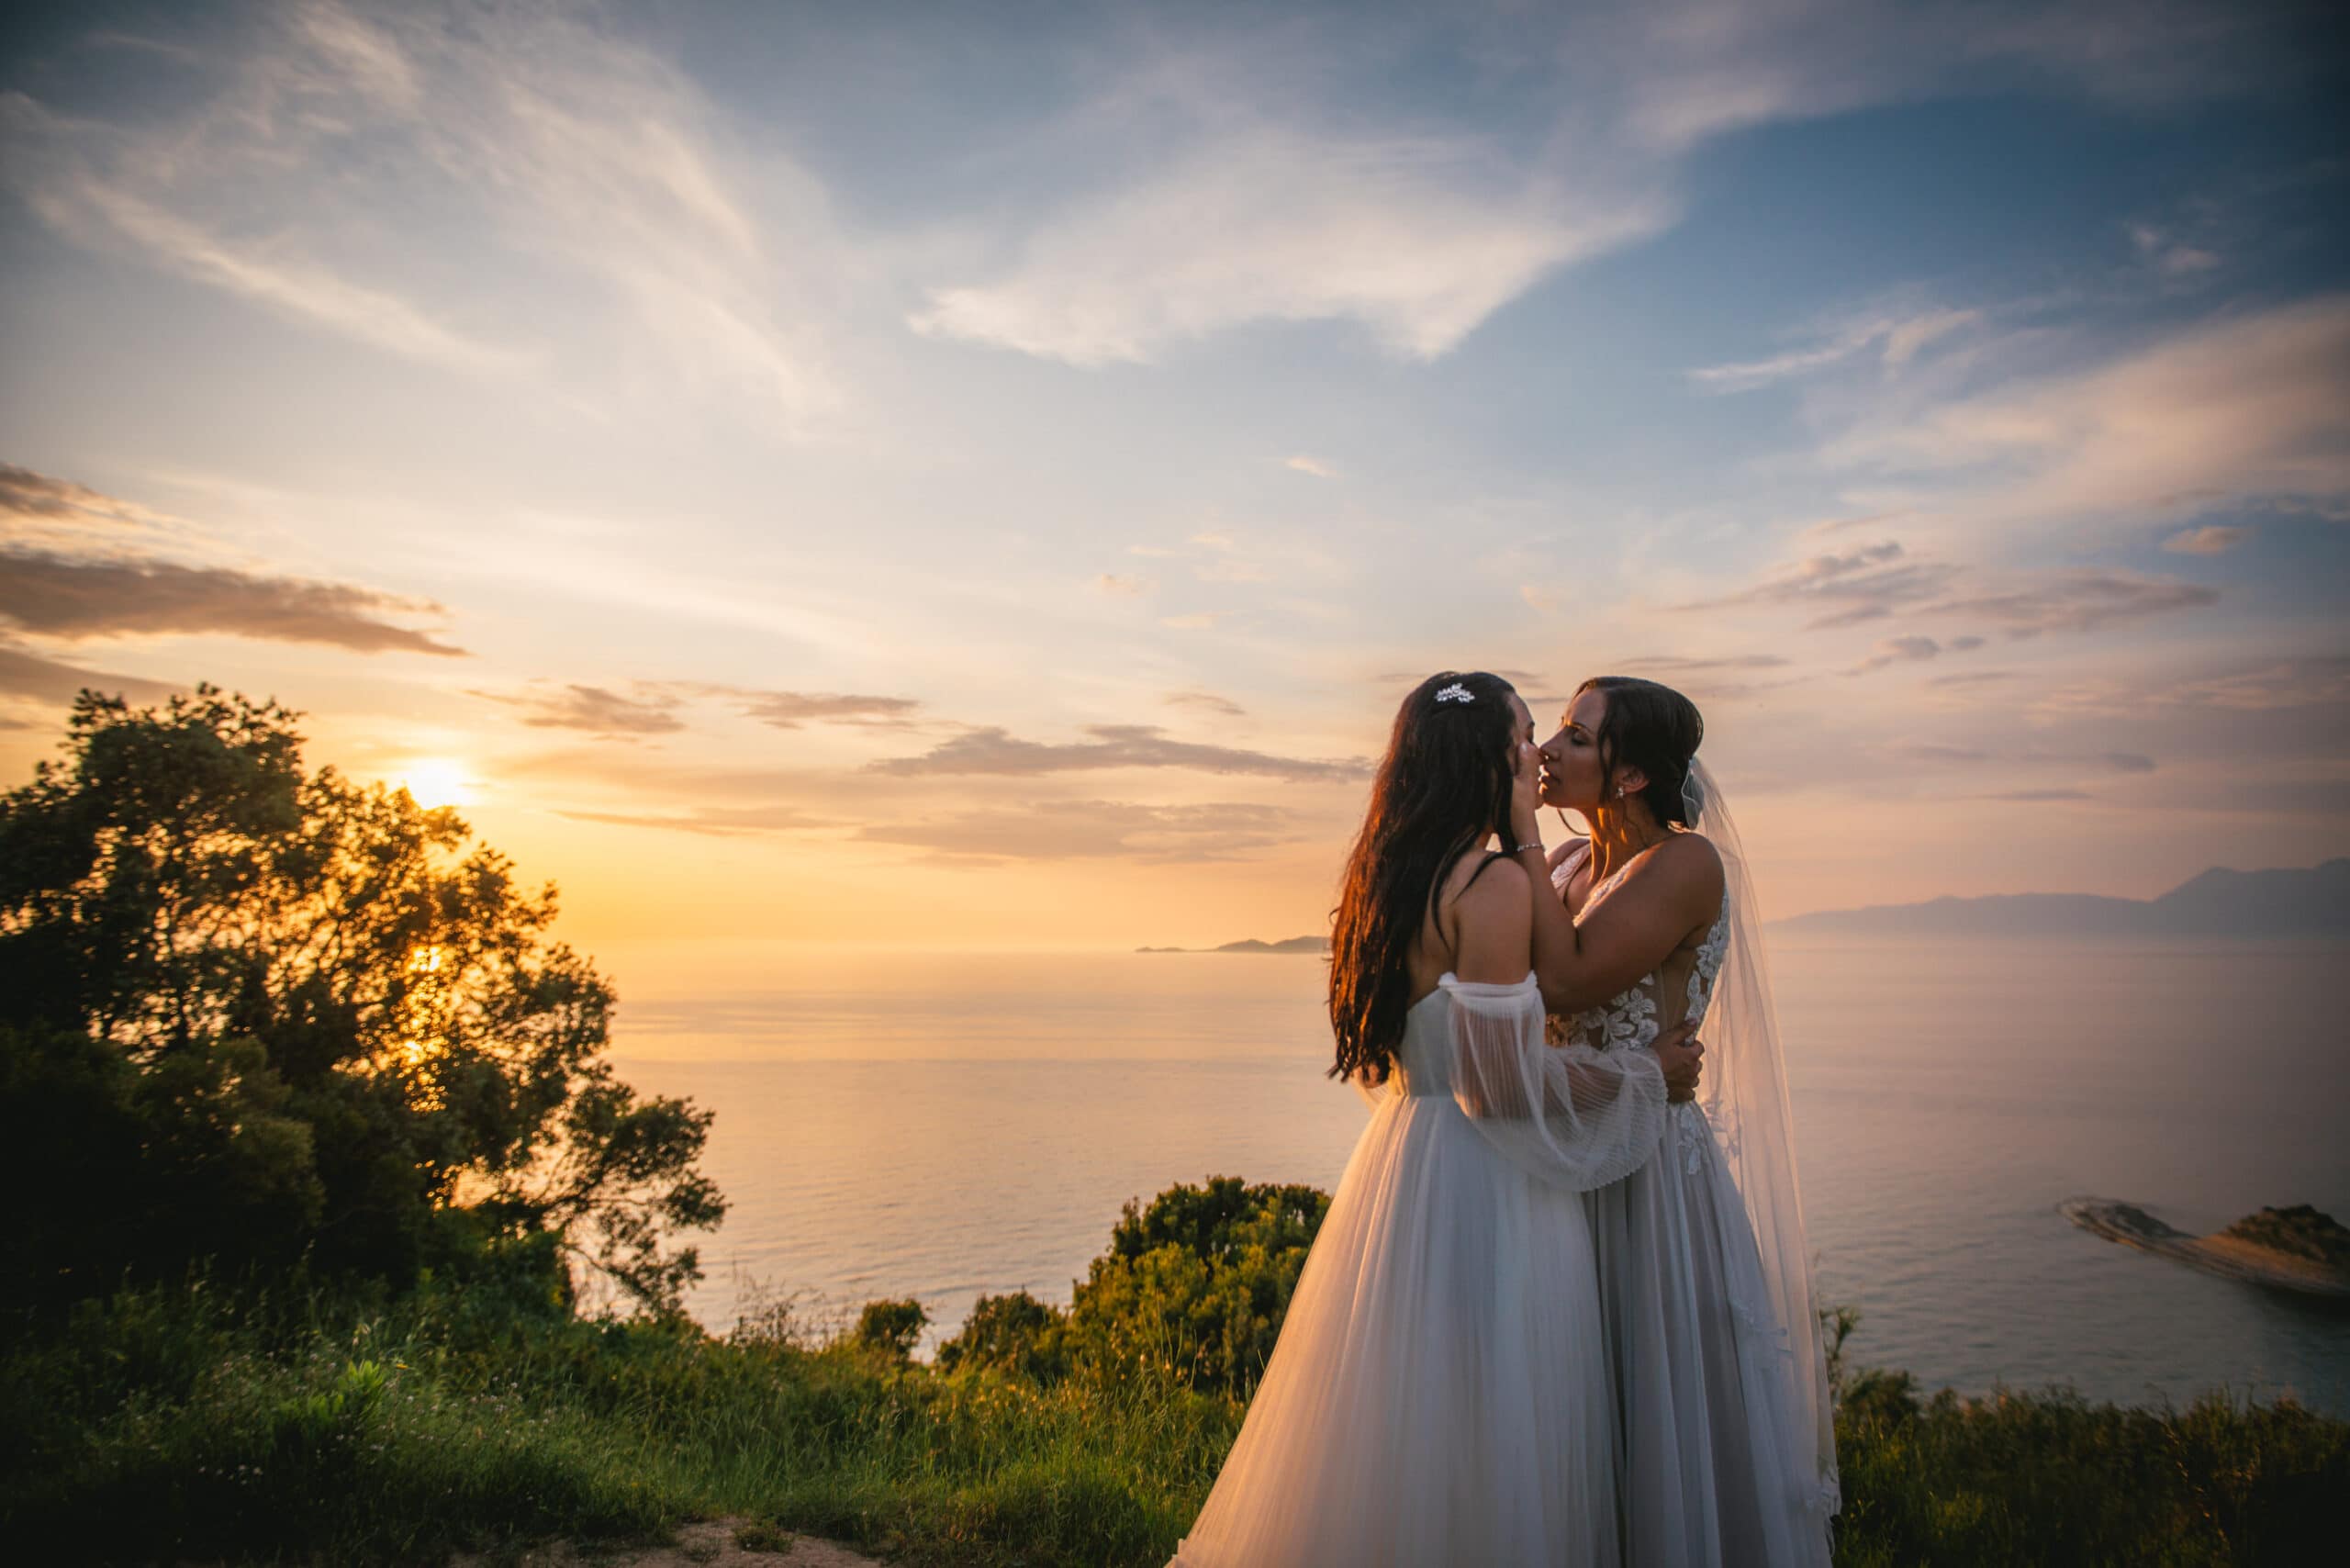 Brides snuggled close, sunset's warmth enveloping their Corfu elopement.